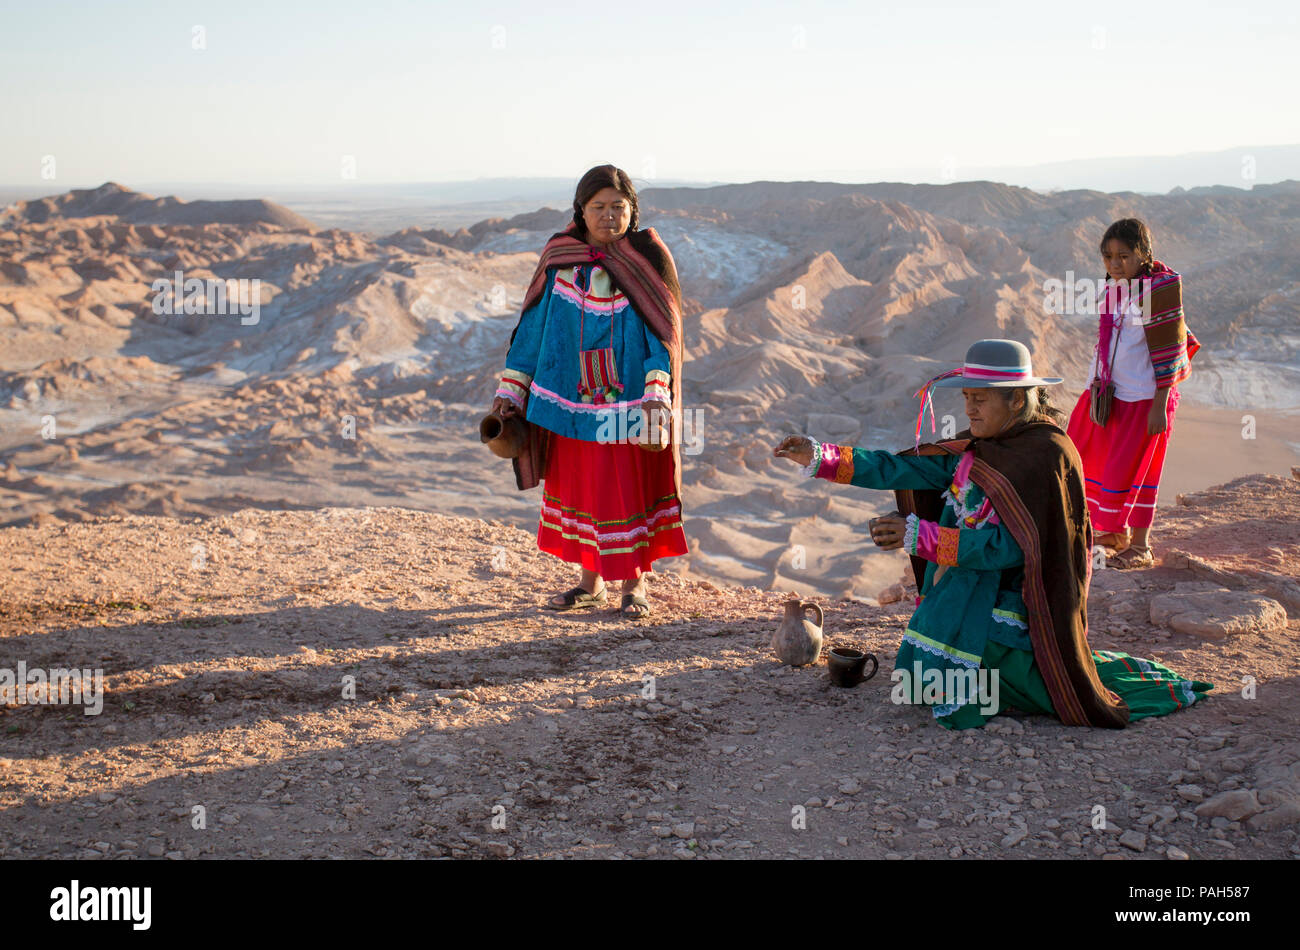 Ceremony to Pachamama aka Mother Earth. South America, Northern Chile, Antofagasta, Atacama Desert. Stock Photo